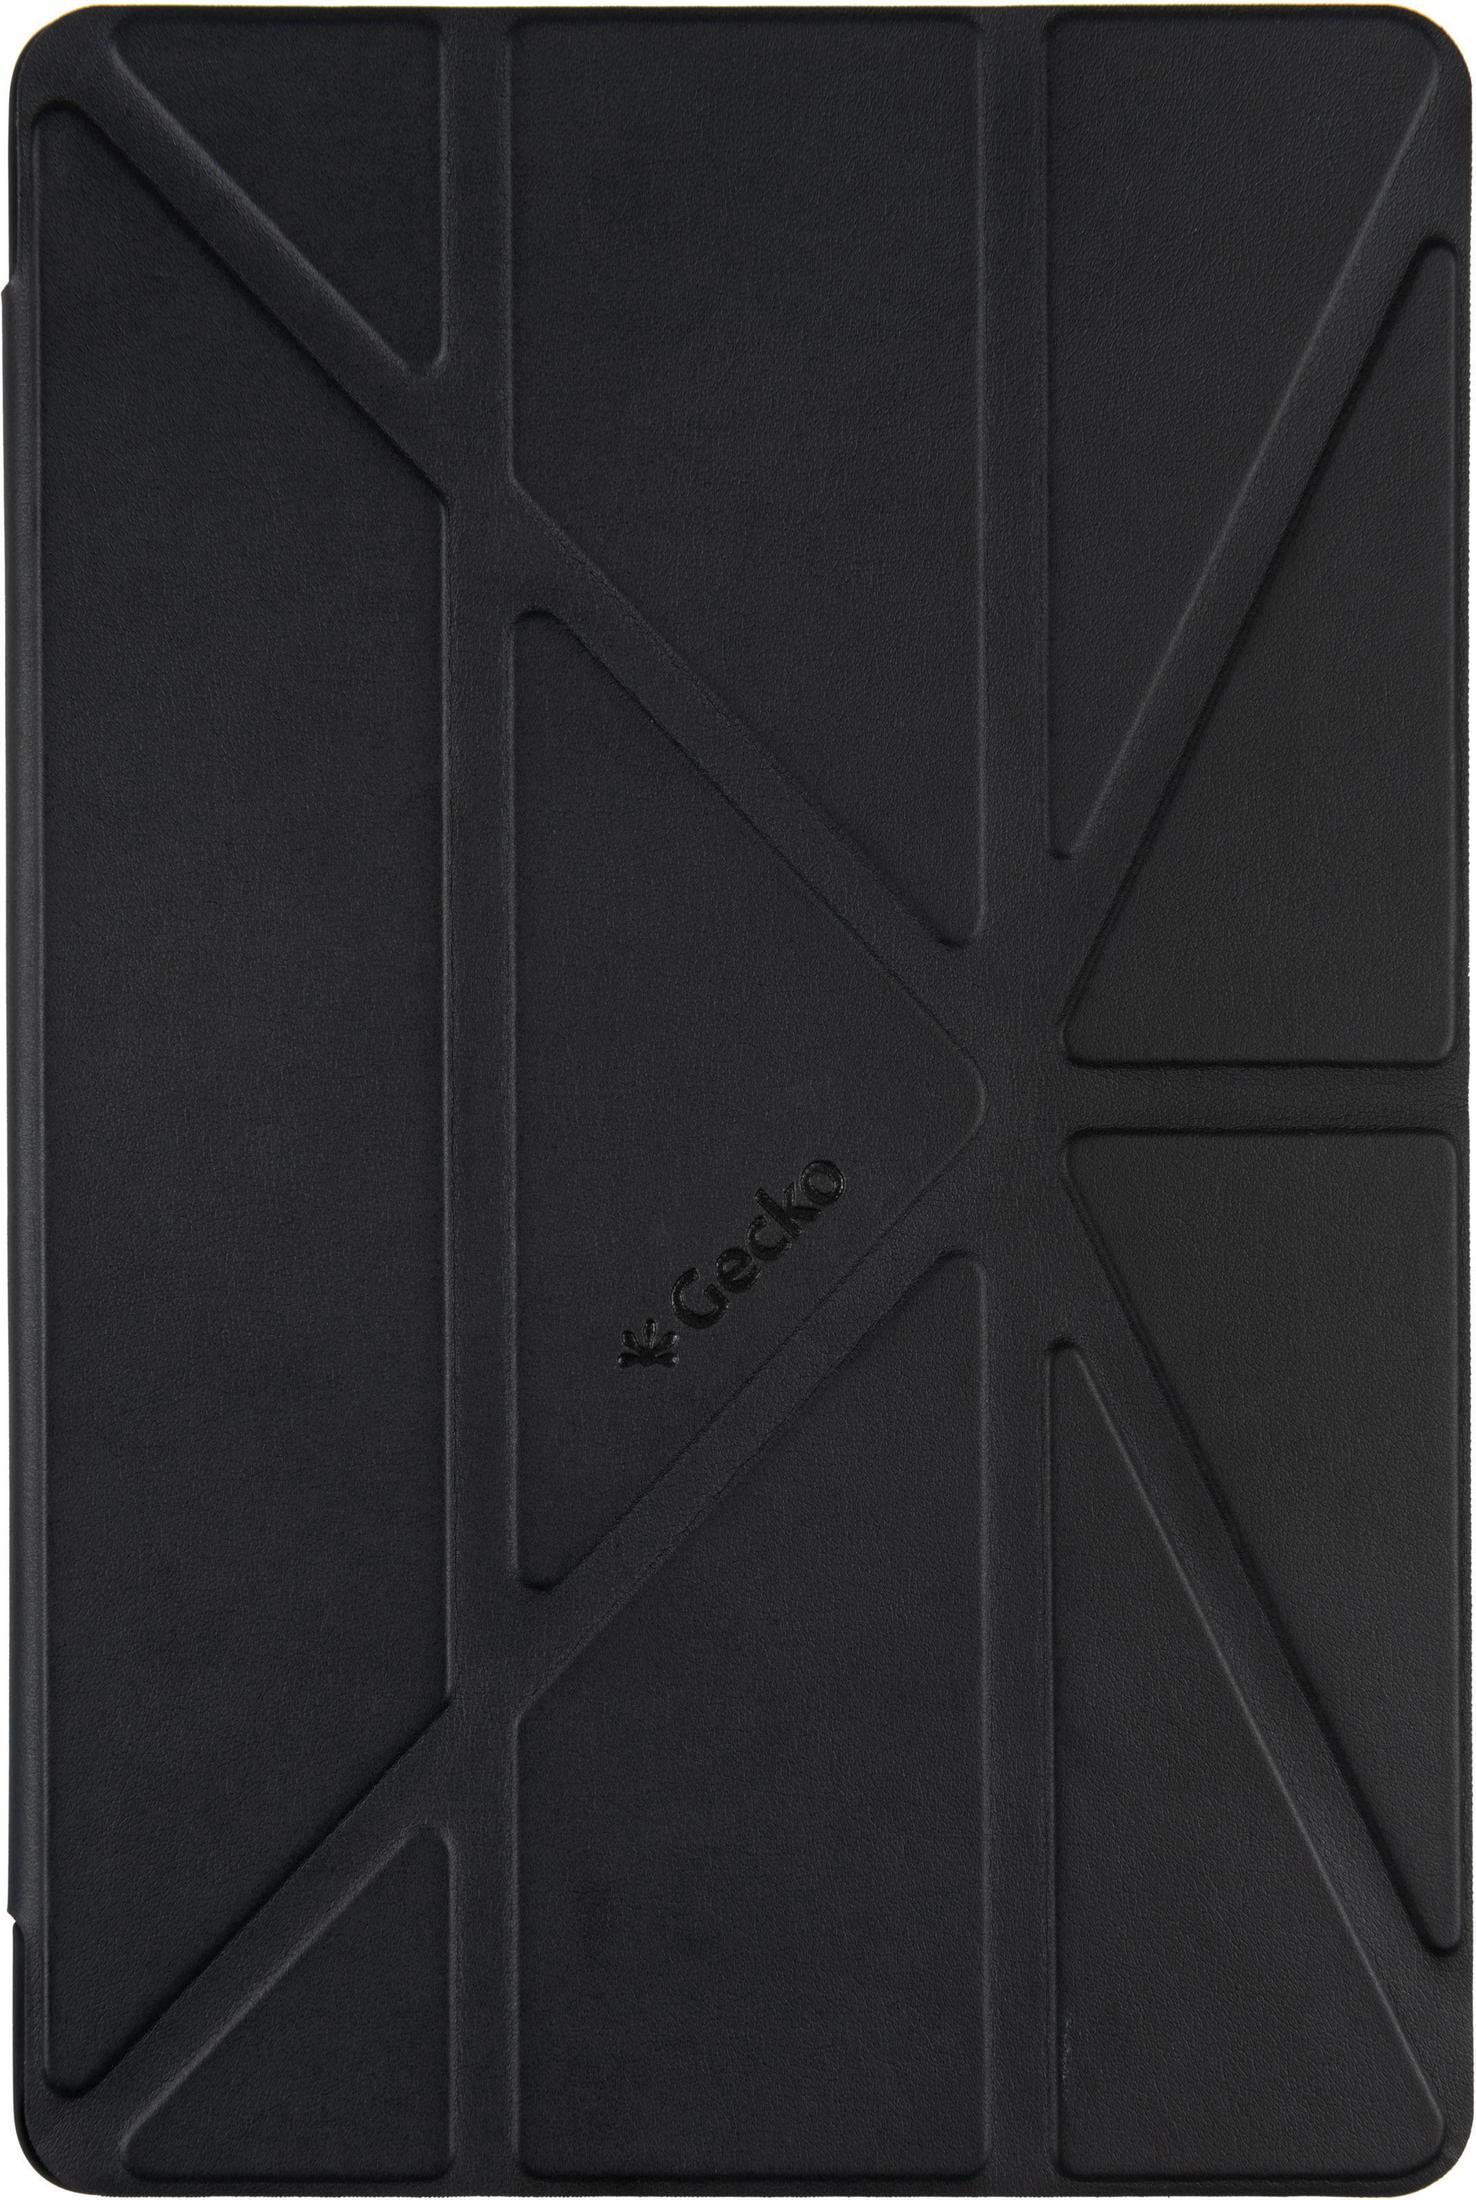 M5(PRO) Außenmaterial: Bookcover Huawei ORIGAMI V26T6C1 für Schwarz 10.8 HUAWEI COVER GECKO Velours, MEDIAPAD Innenmaterial: Tablettasche Kunstleder,